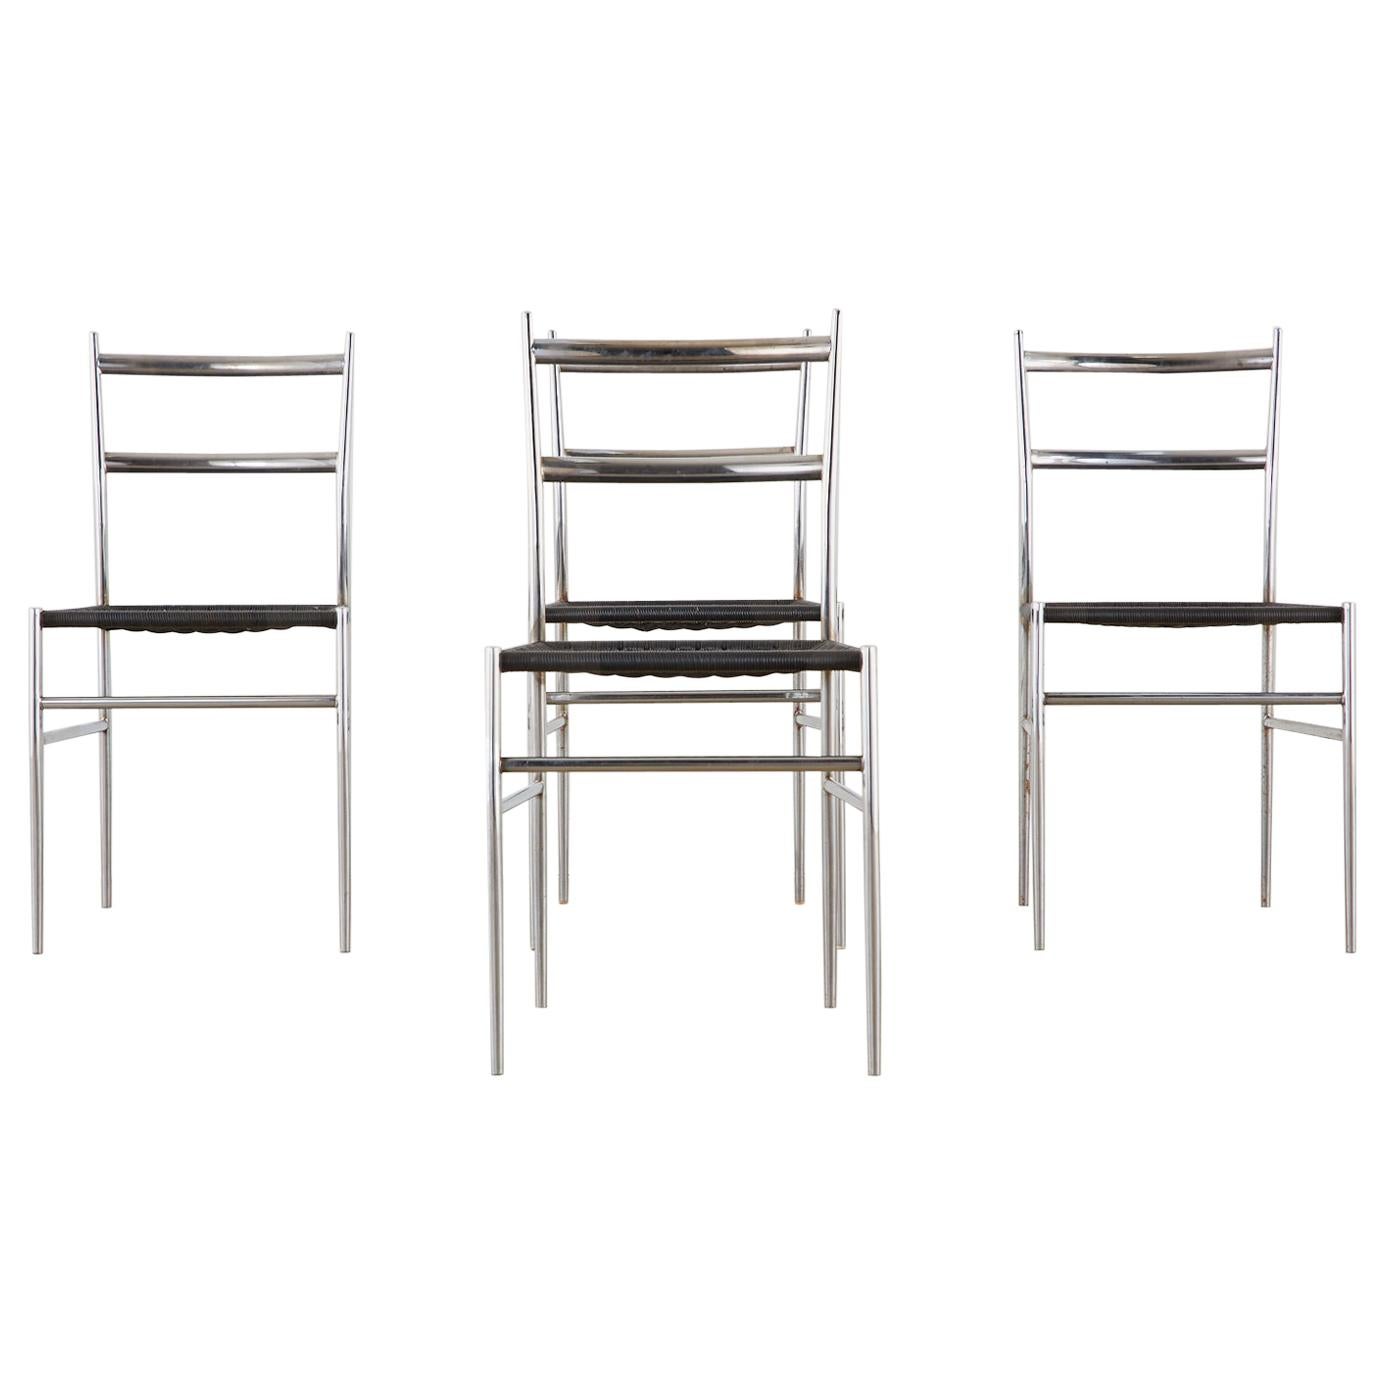 Set of Four Chrome Dining Chairs, style of Gio Ponti's "Superleggera", c 1960